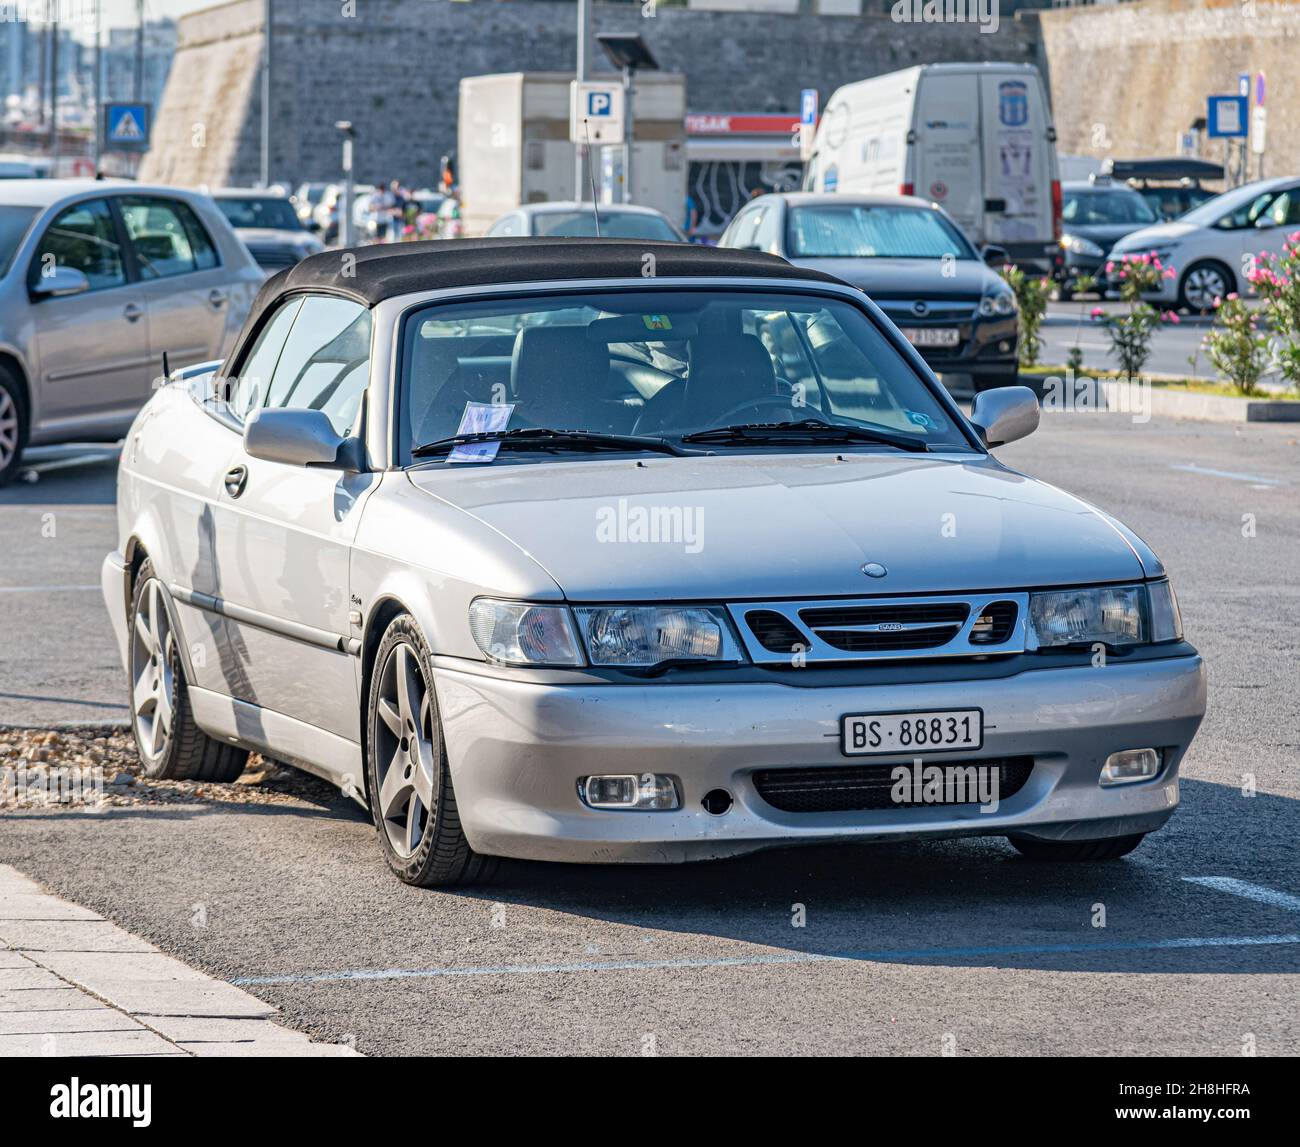 Saab car in a parking lot in the city of Zadar, Croatia. Stock Photo